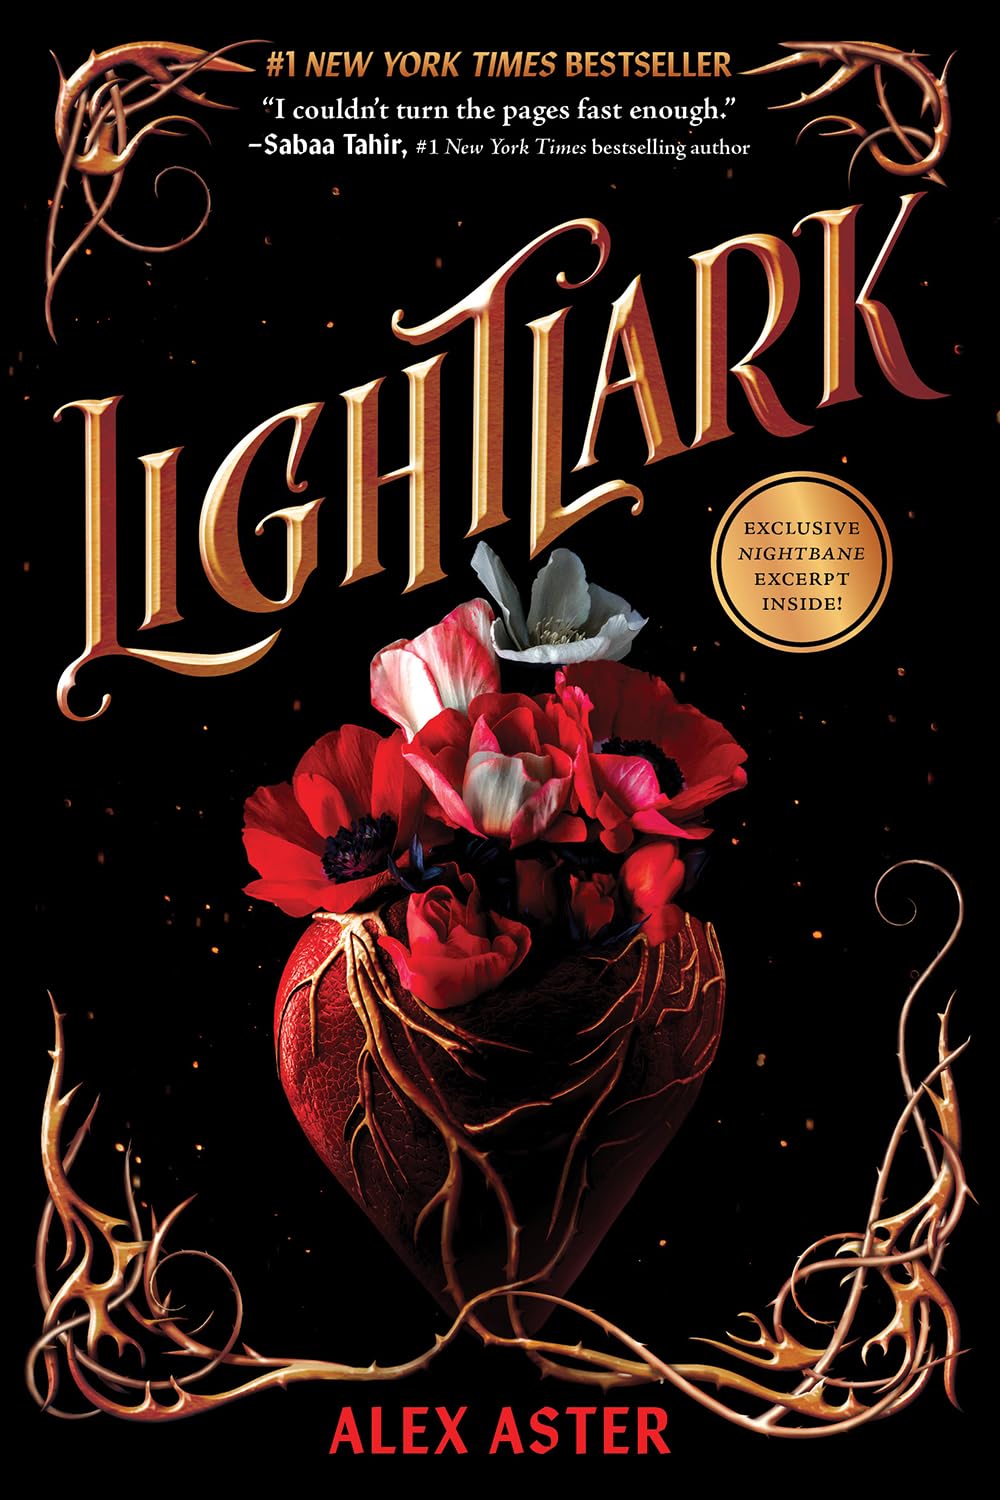 Lightlark: The Lightlark Saga Book 1 by Alex Aster